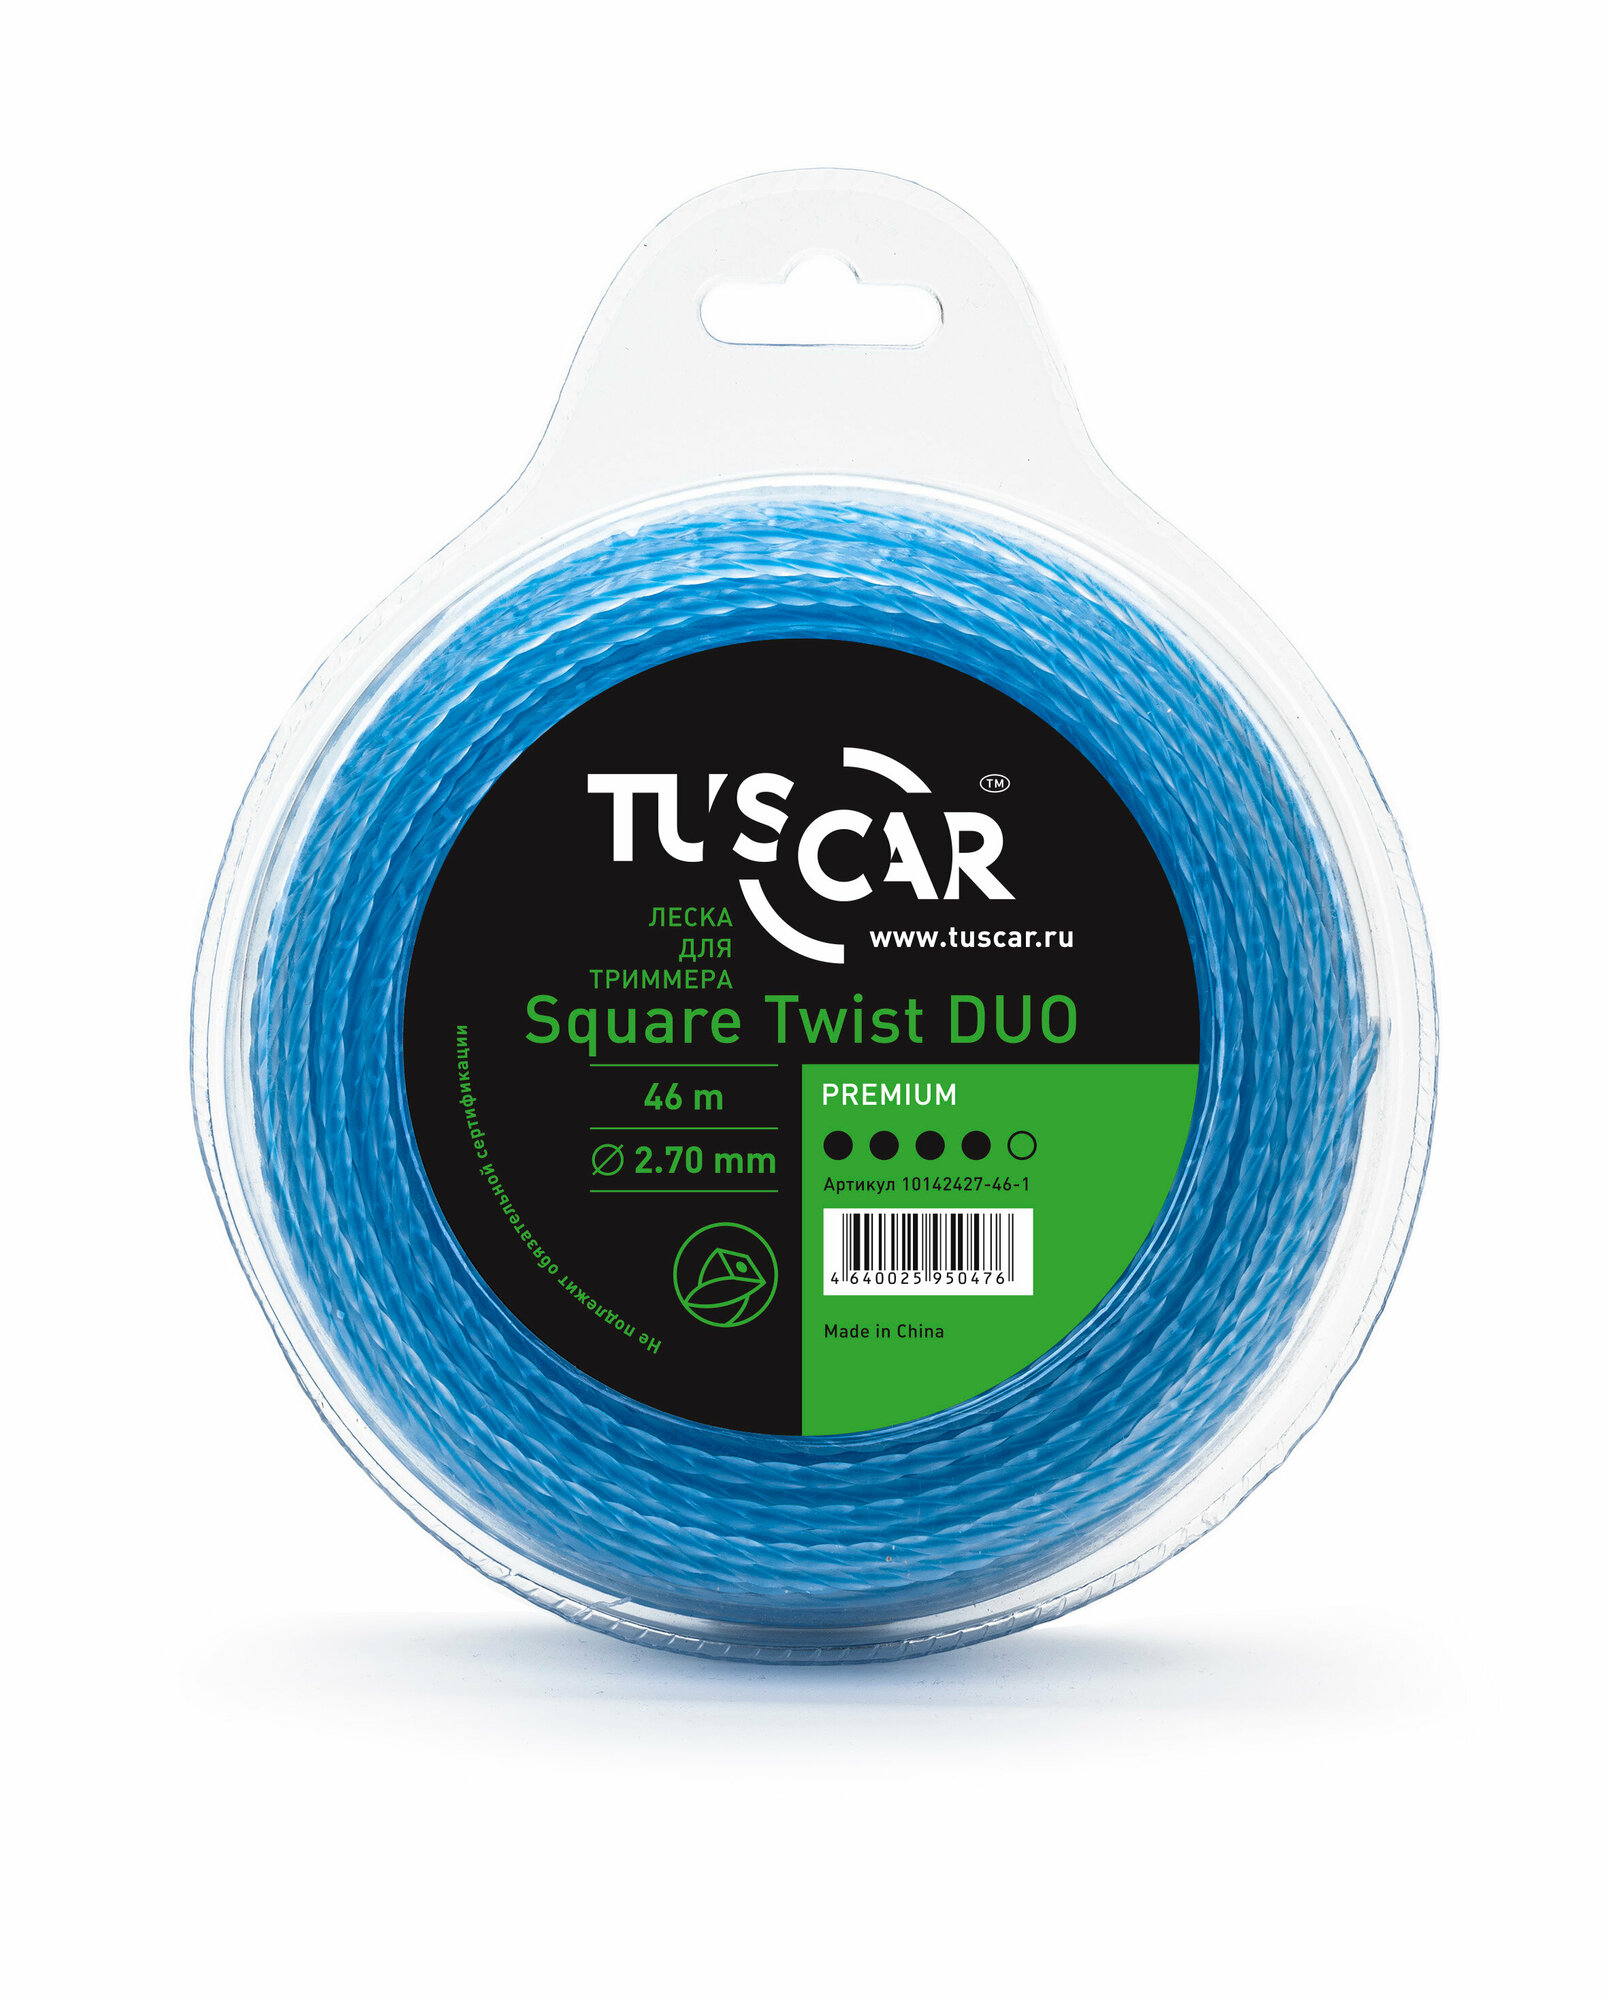 Леска для триммера TUSCAR Square Twist DUO Premium, 2.70мм* 46м